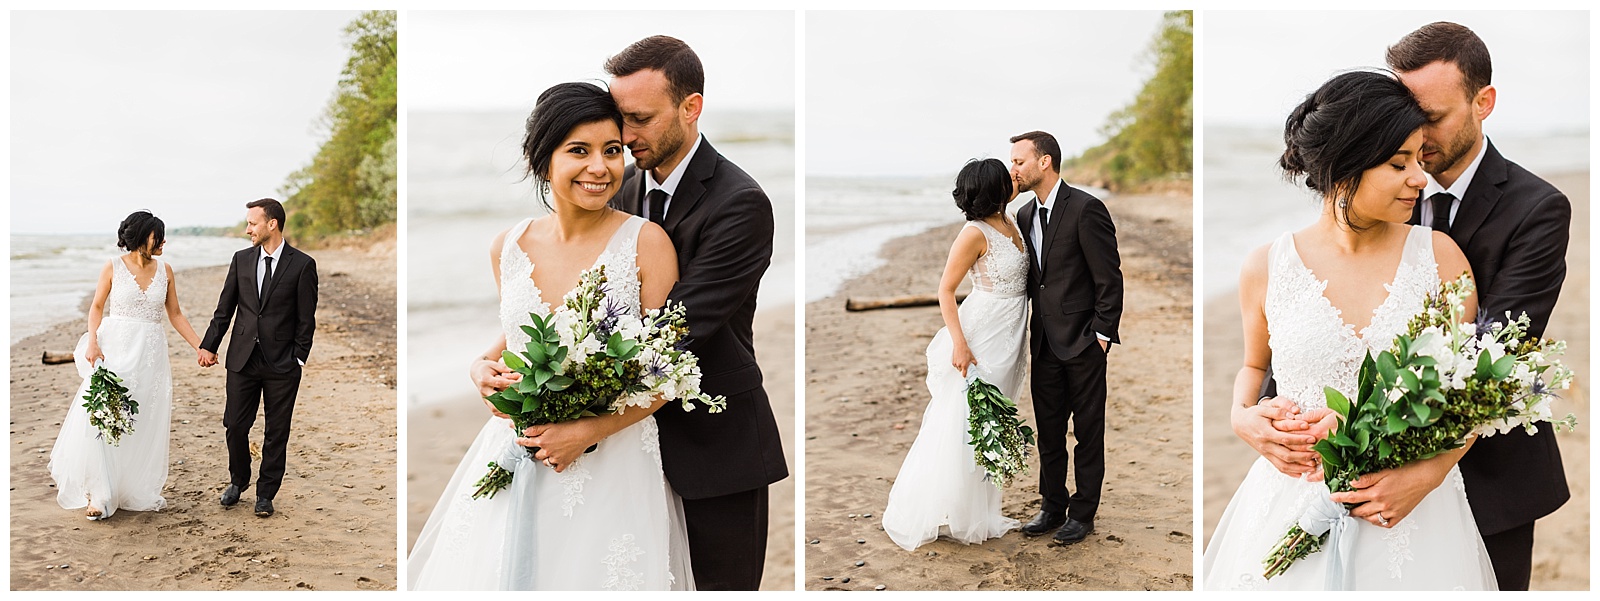 Bride and groom portraits on Traverse City beach during Northern Michigan beach wedding.